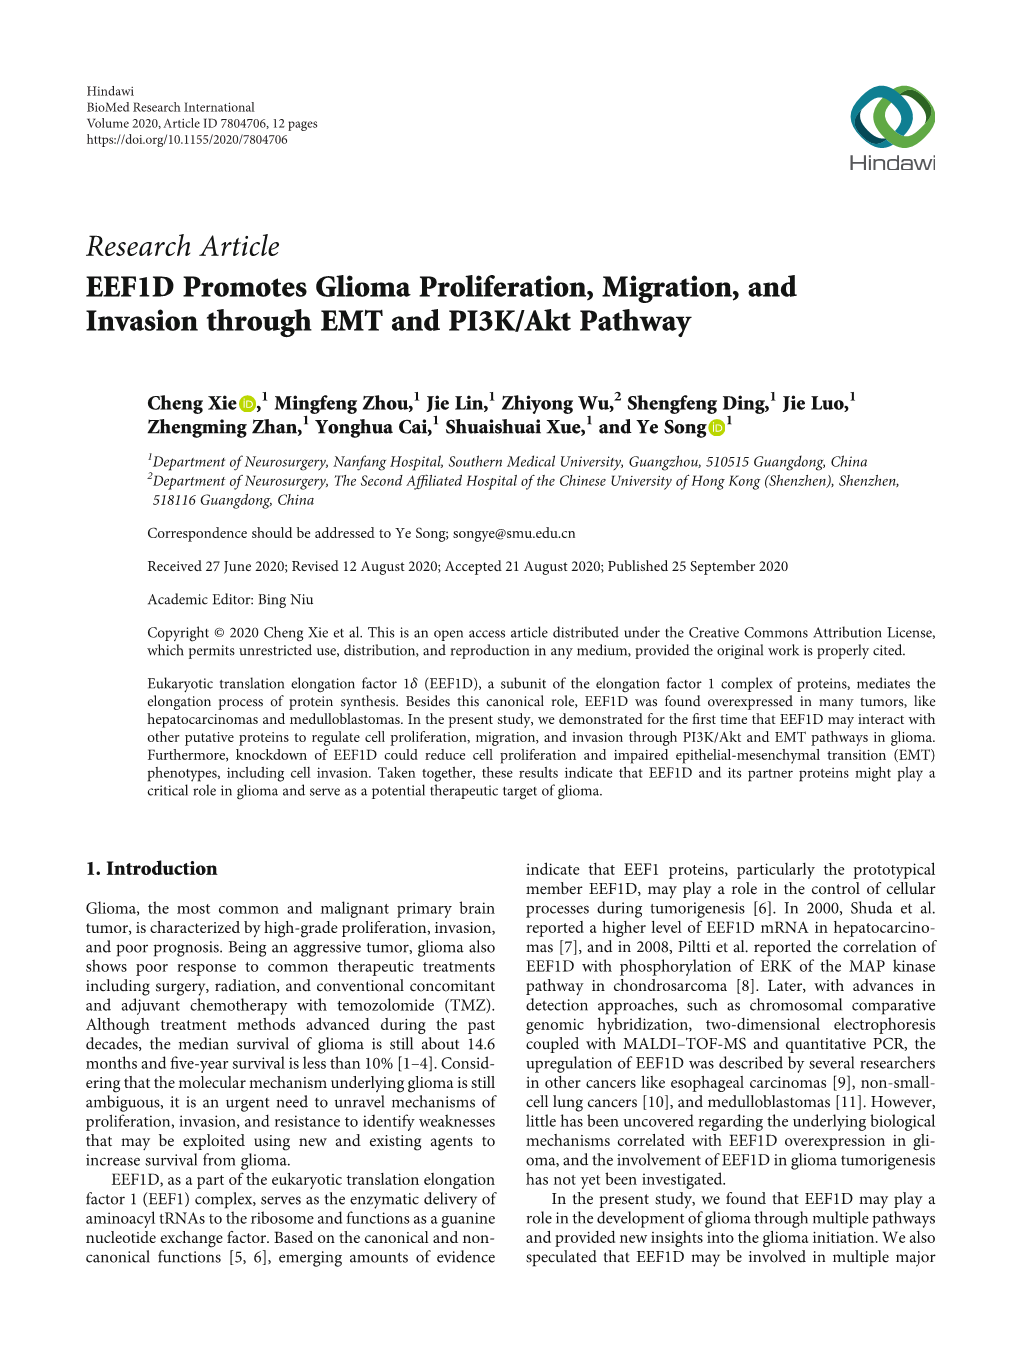 EEF1D Promotes Glioma Proliferation, Migration, and Invasion Through EMT and PI3K/Akt Pathway